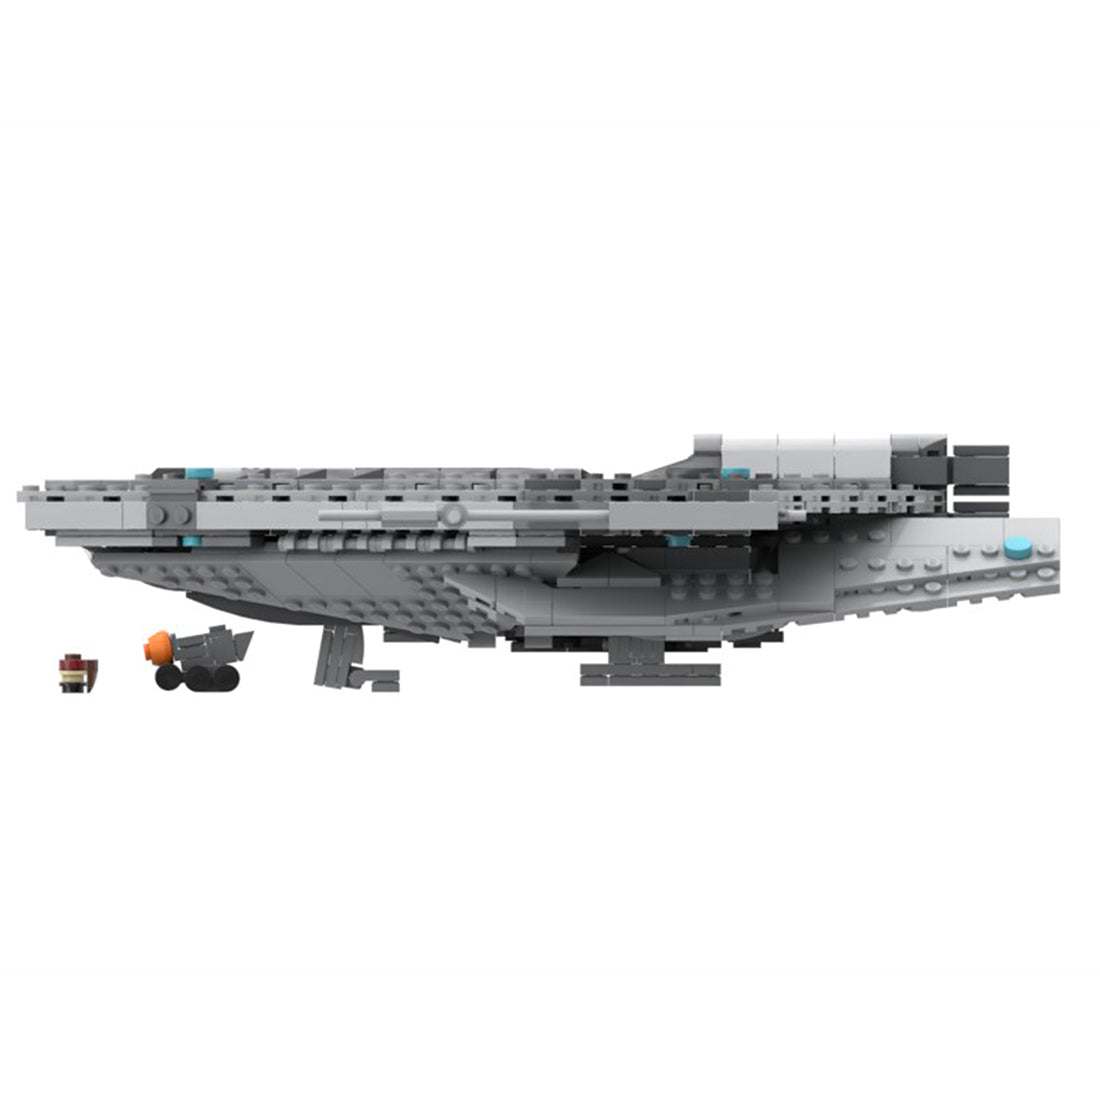 MOC-66759 1/250 Scale Krait MK II NANO Warships